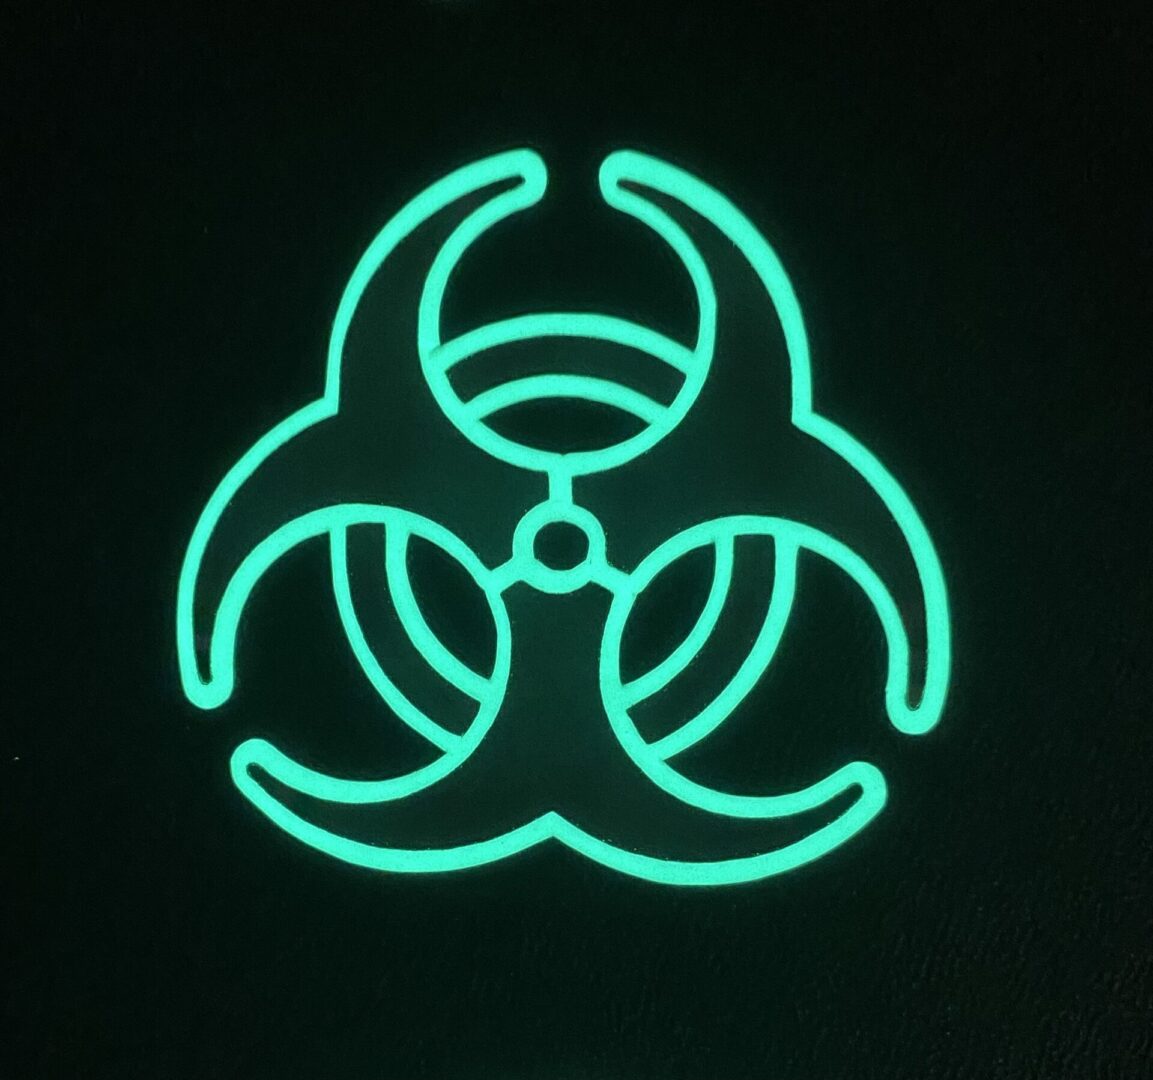 a glow-in-the-dark radioactive symbol